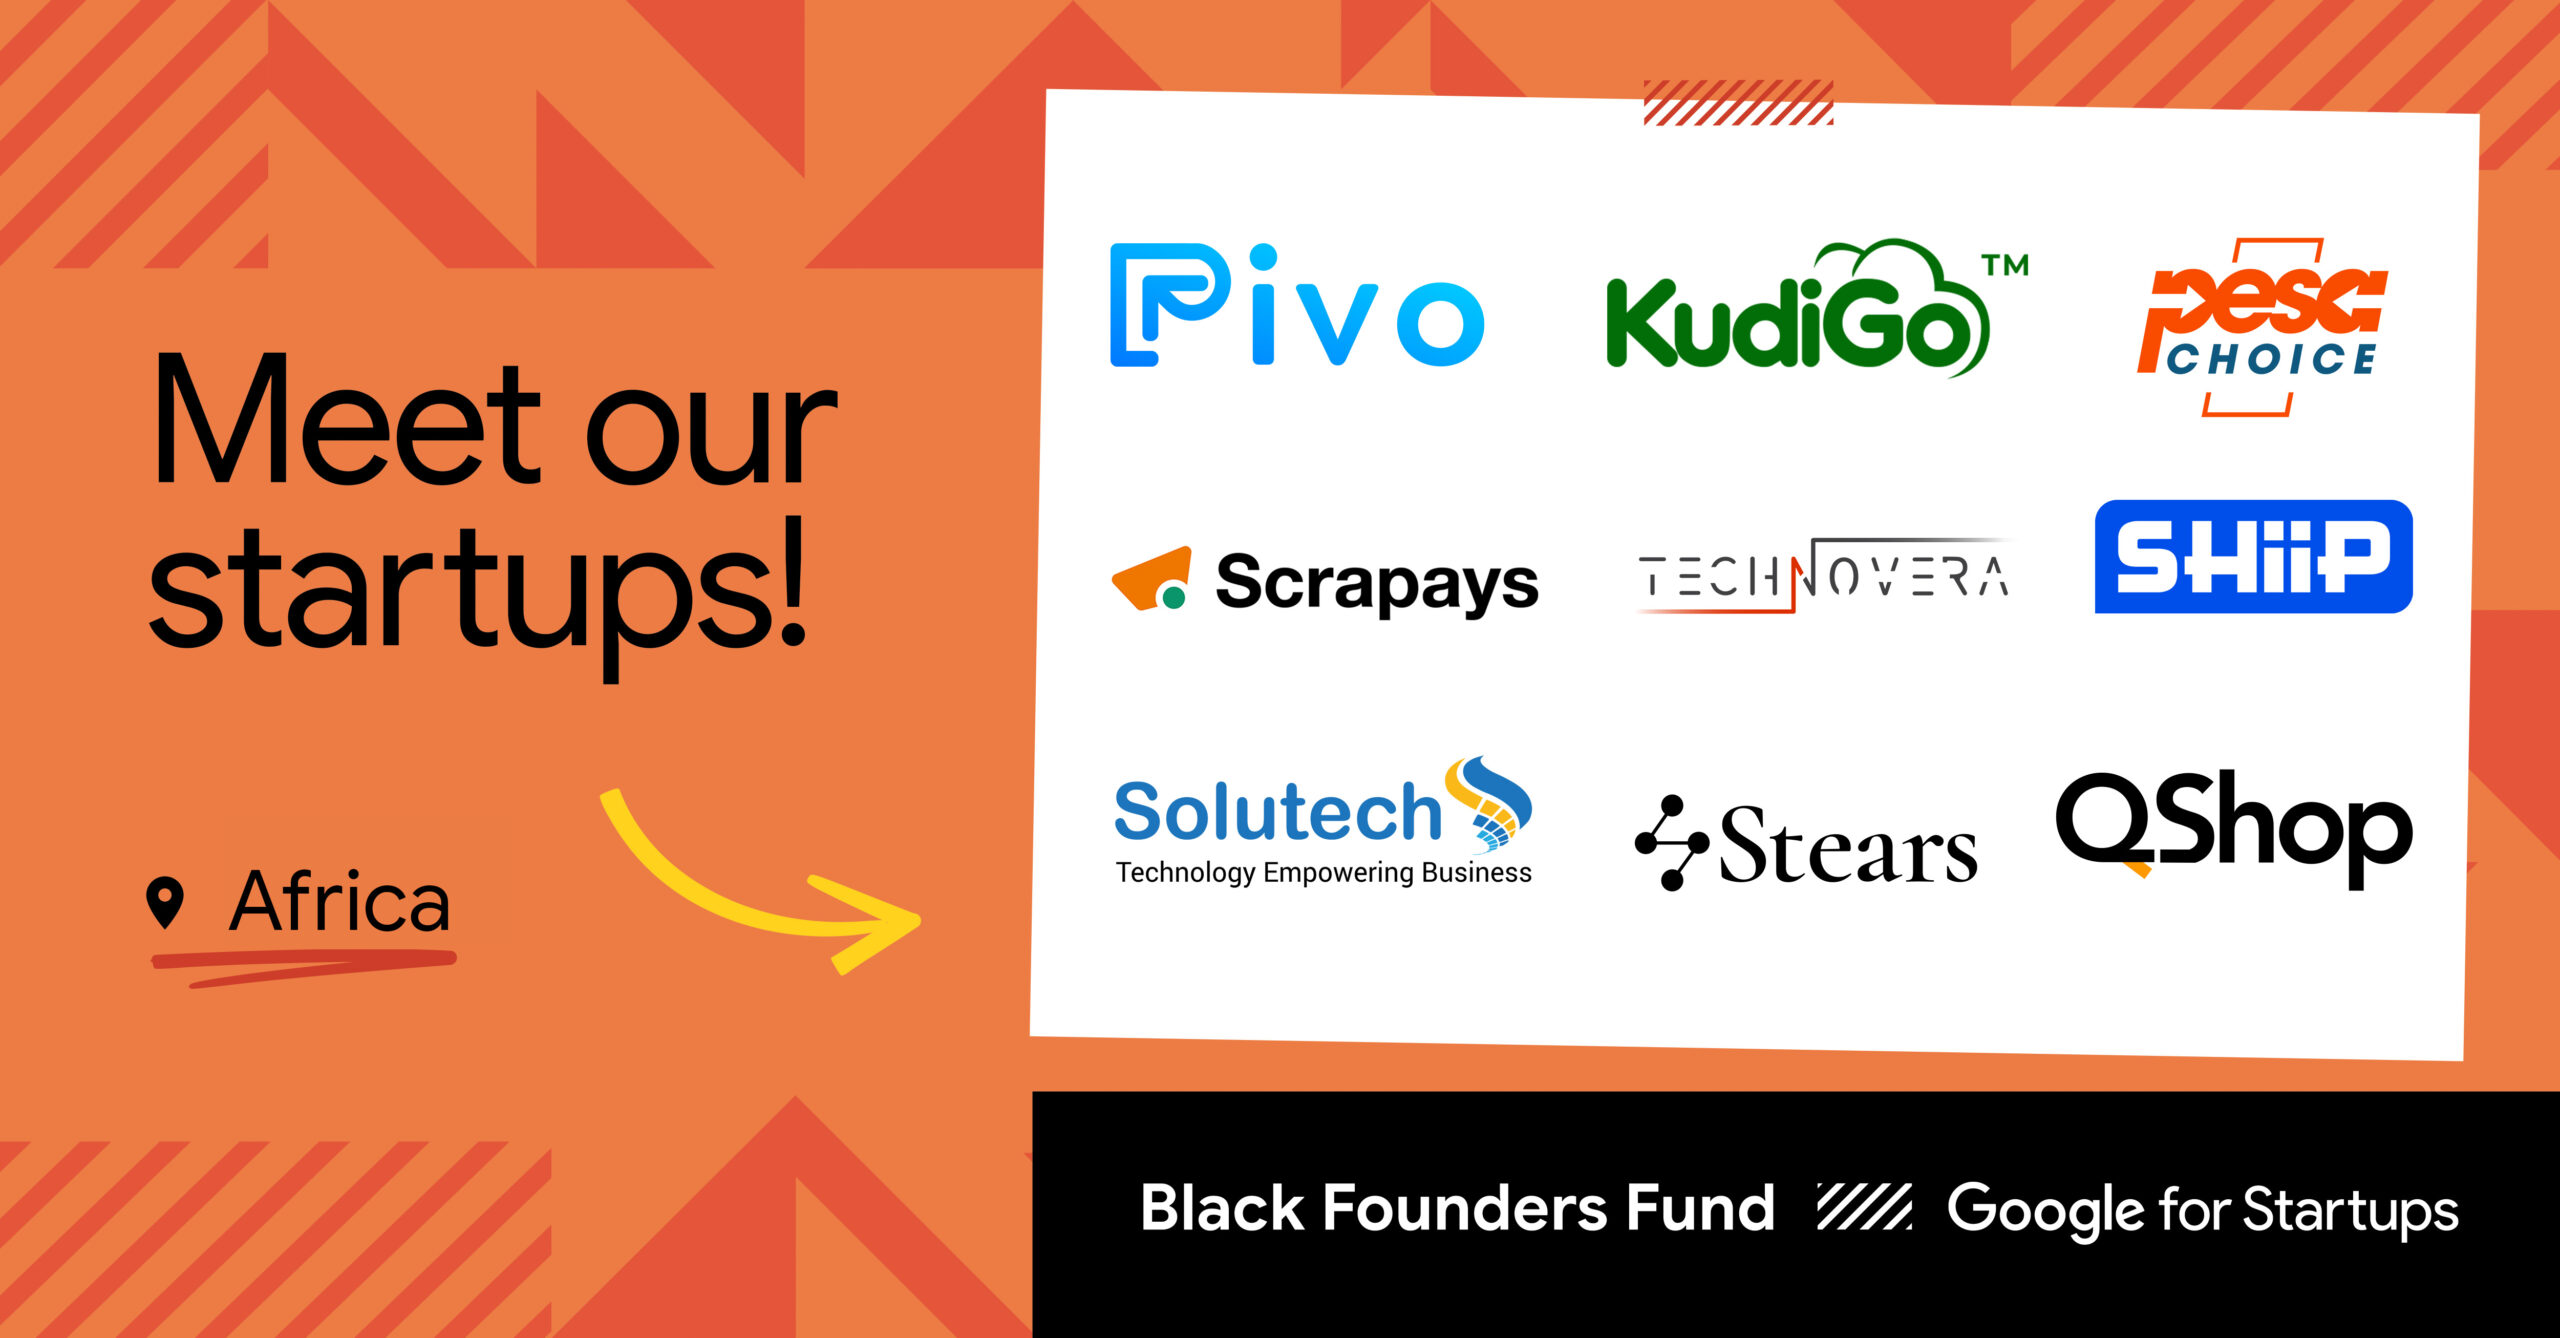 QShop gets selected for Google Black Founders Fund